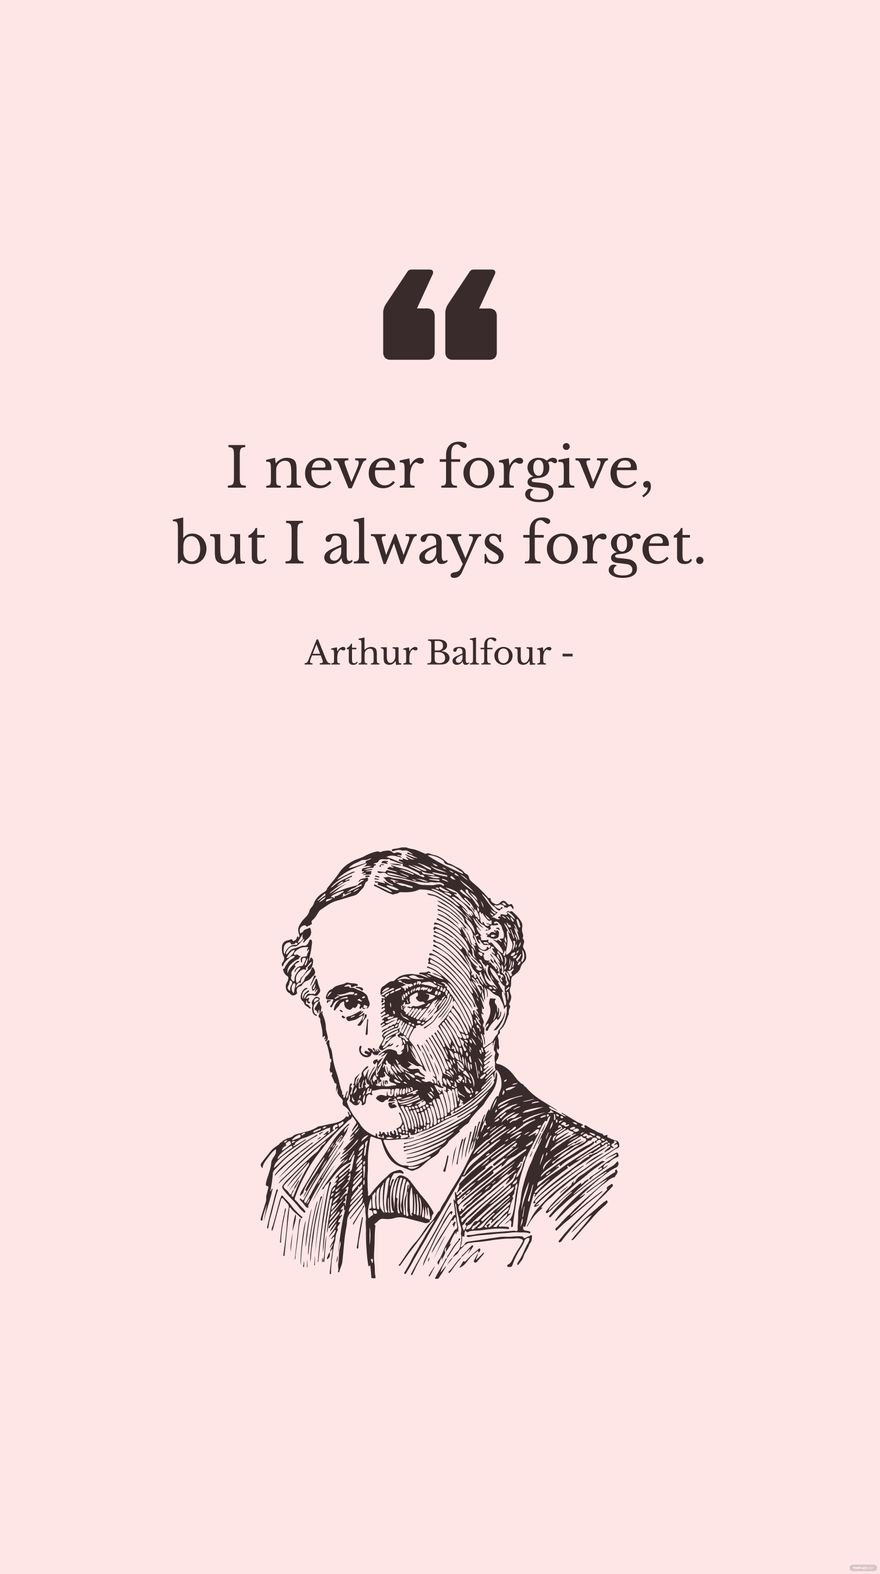 Arthur Balfour - I never forgive, but I always forget. in JPG